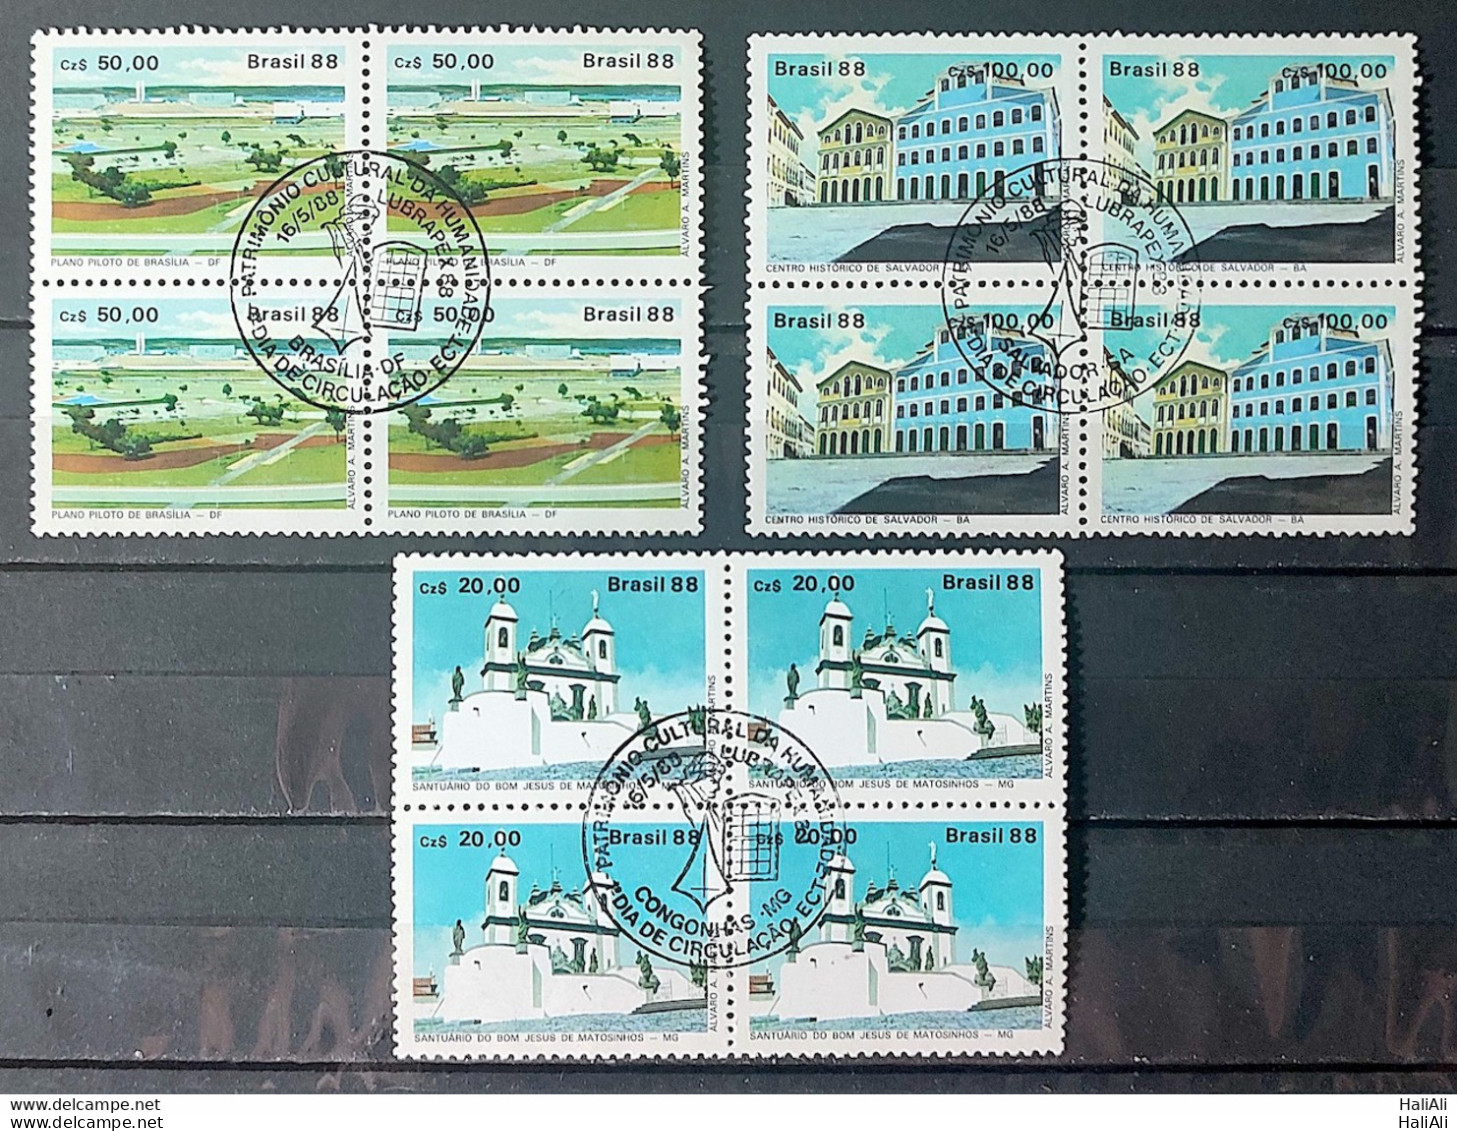 C 1585 Brazil Stamp Lubrapex Portugal Jorge Amado Brasilia 1988 Block Of 4 CBC MG DF BA Full Series - Unused Stamps